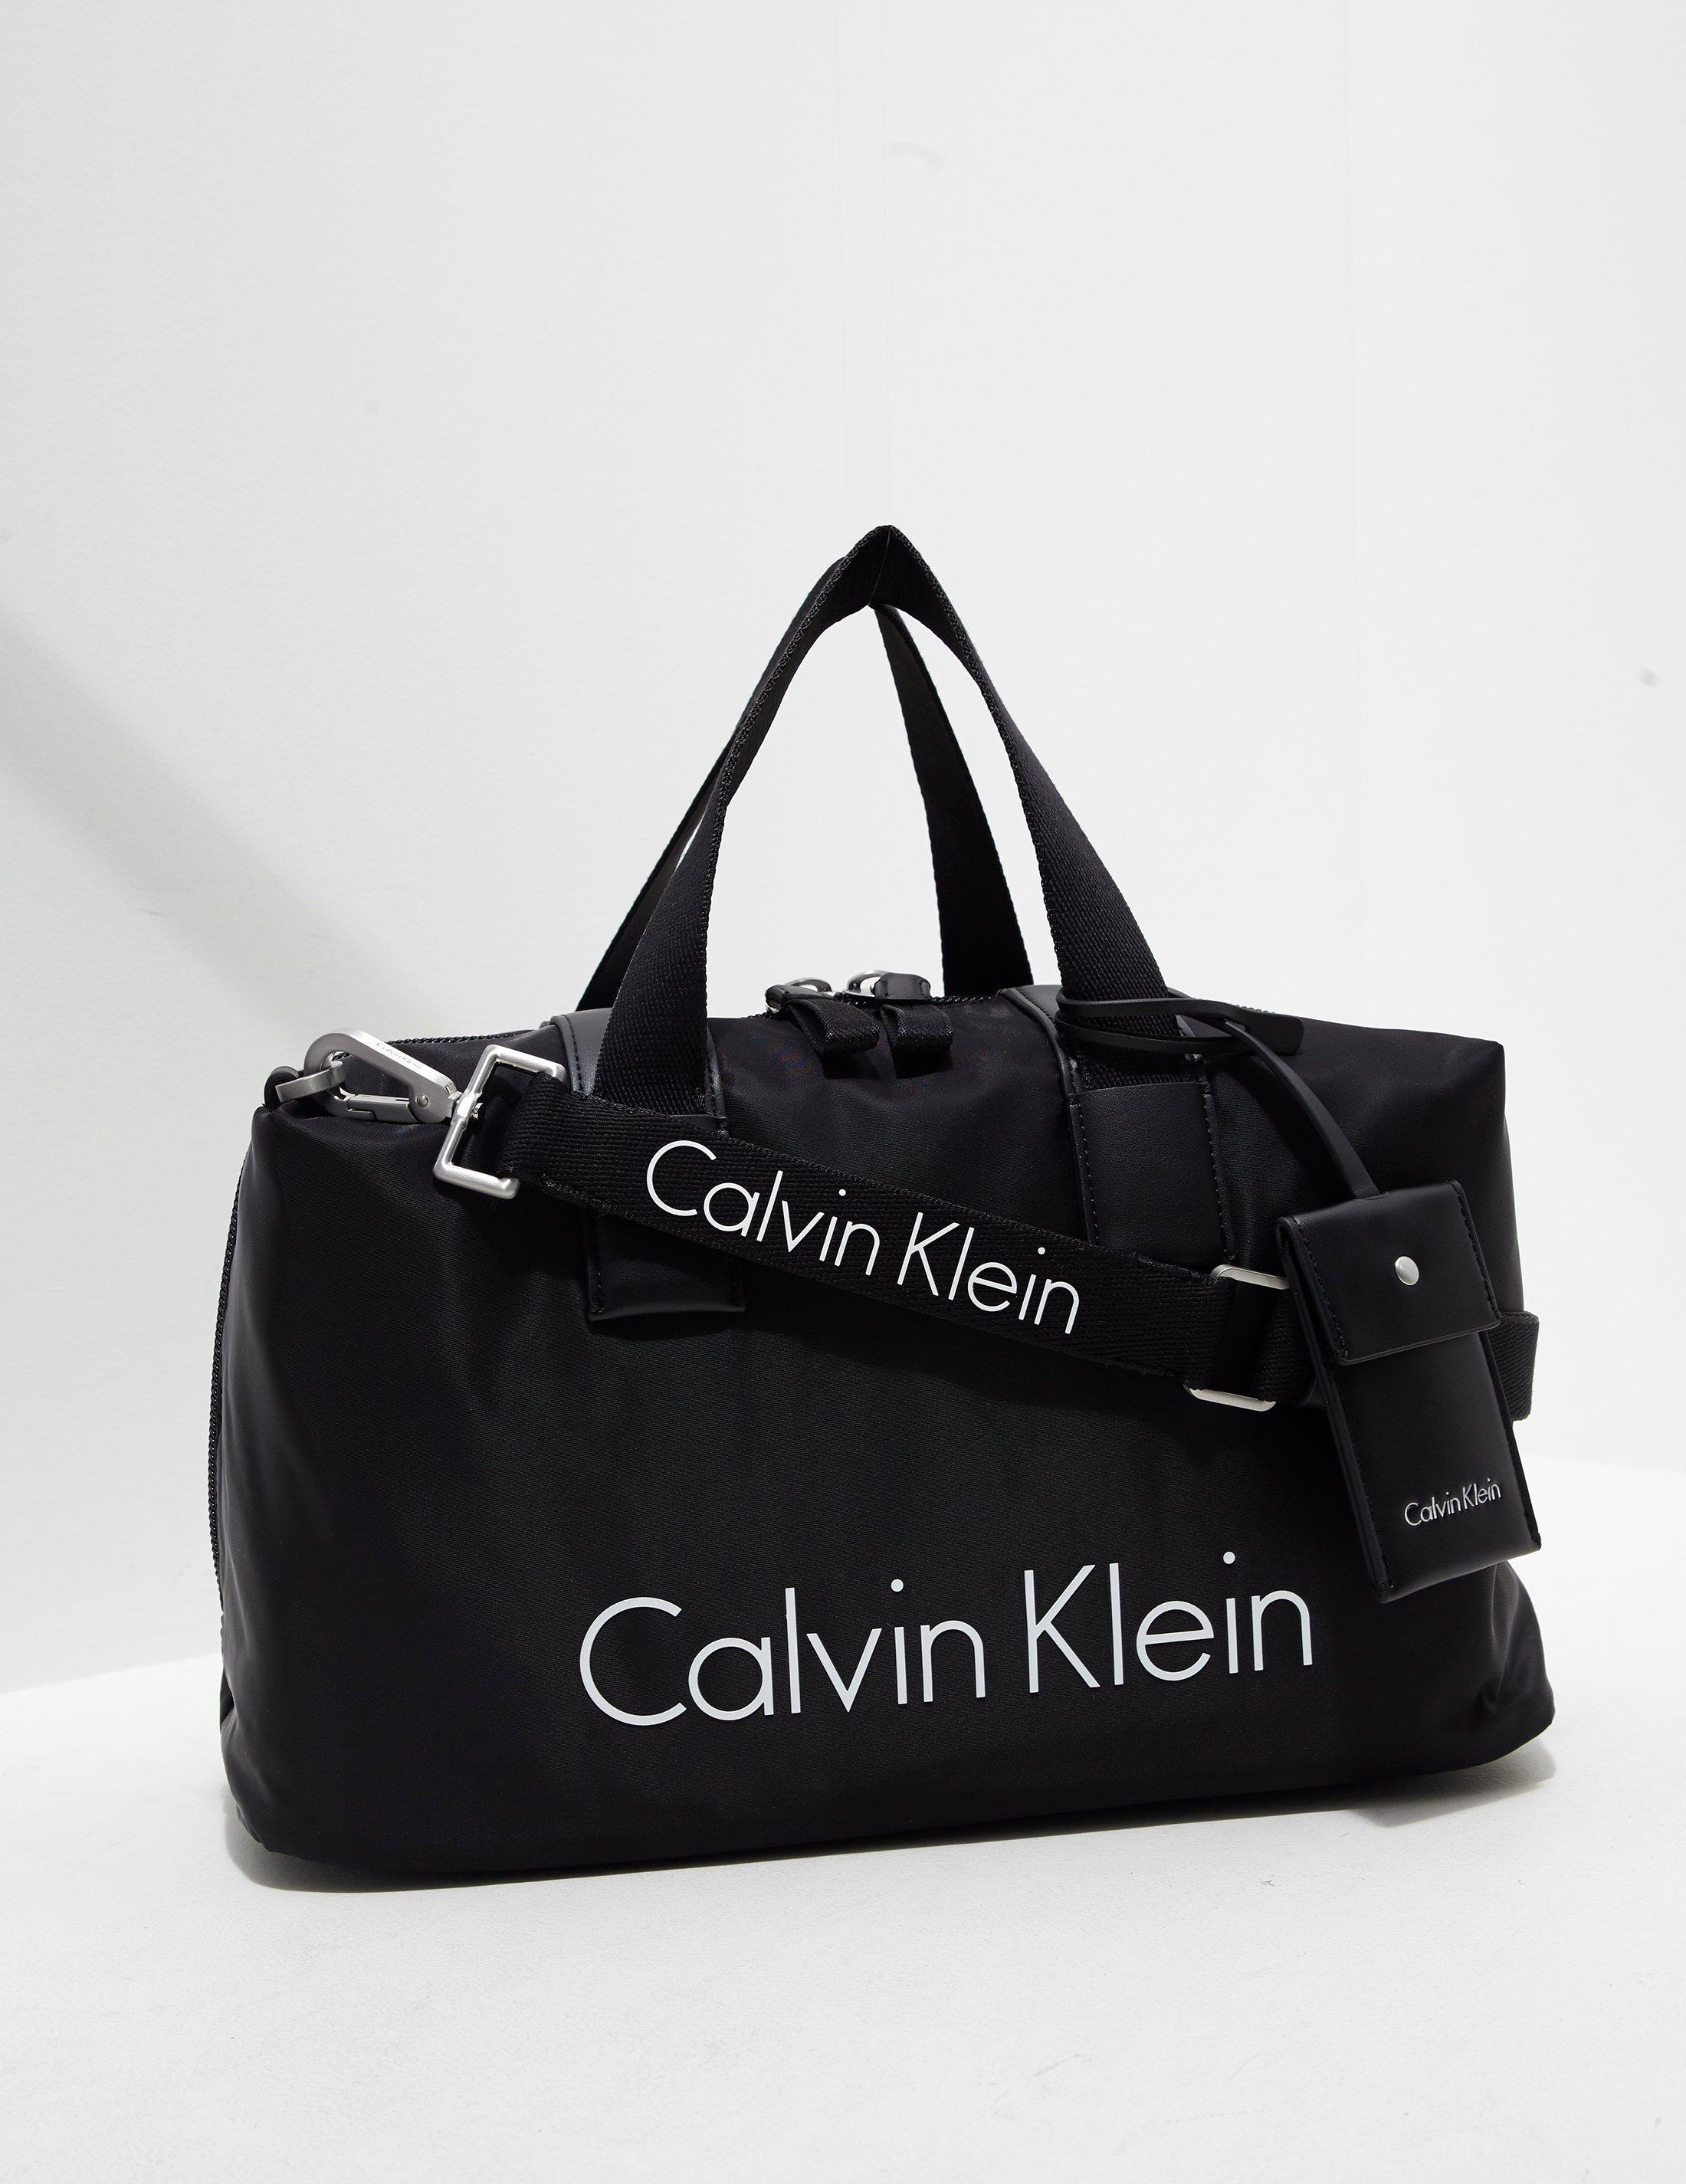 Calvin Klein Sports Bag Hotsell, 58% OFF | www.ingeniovirtual.com